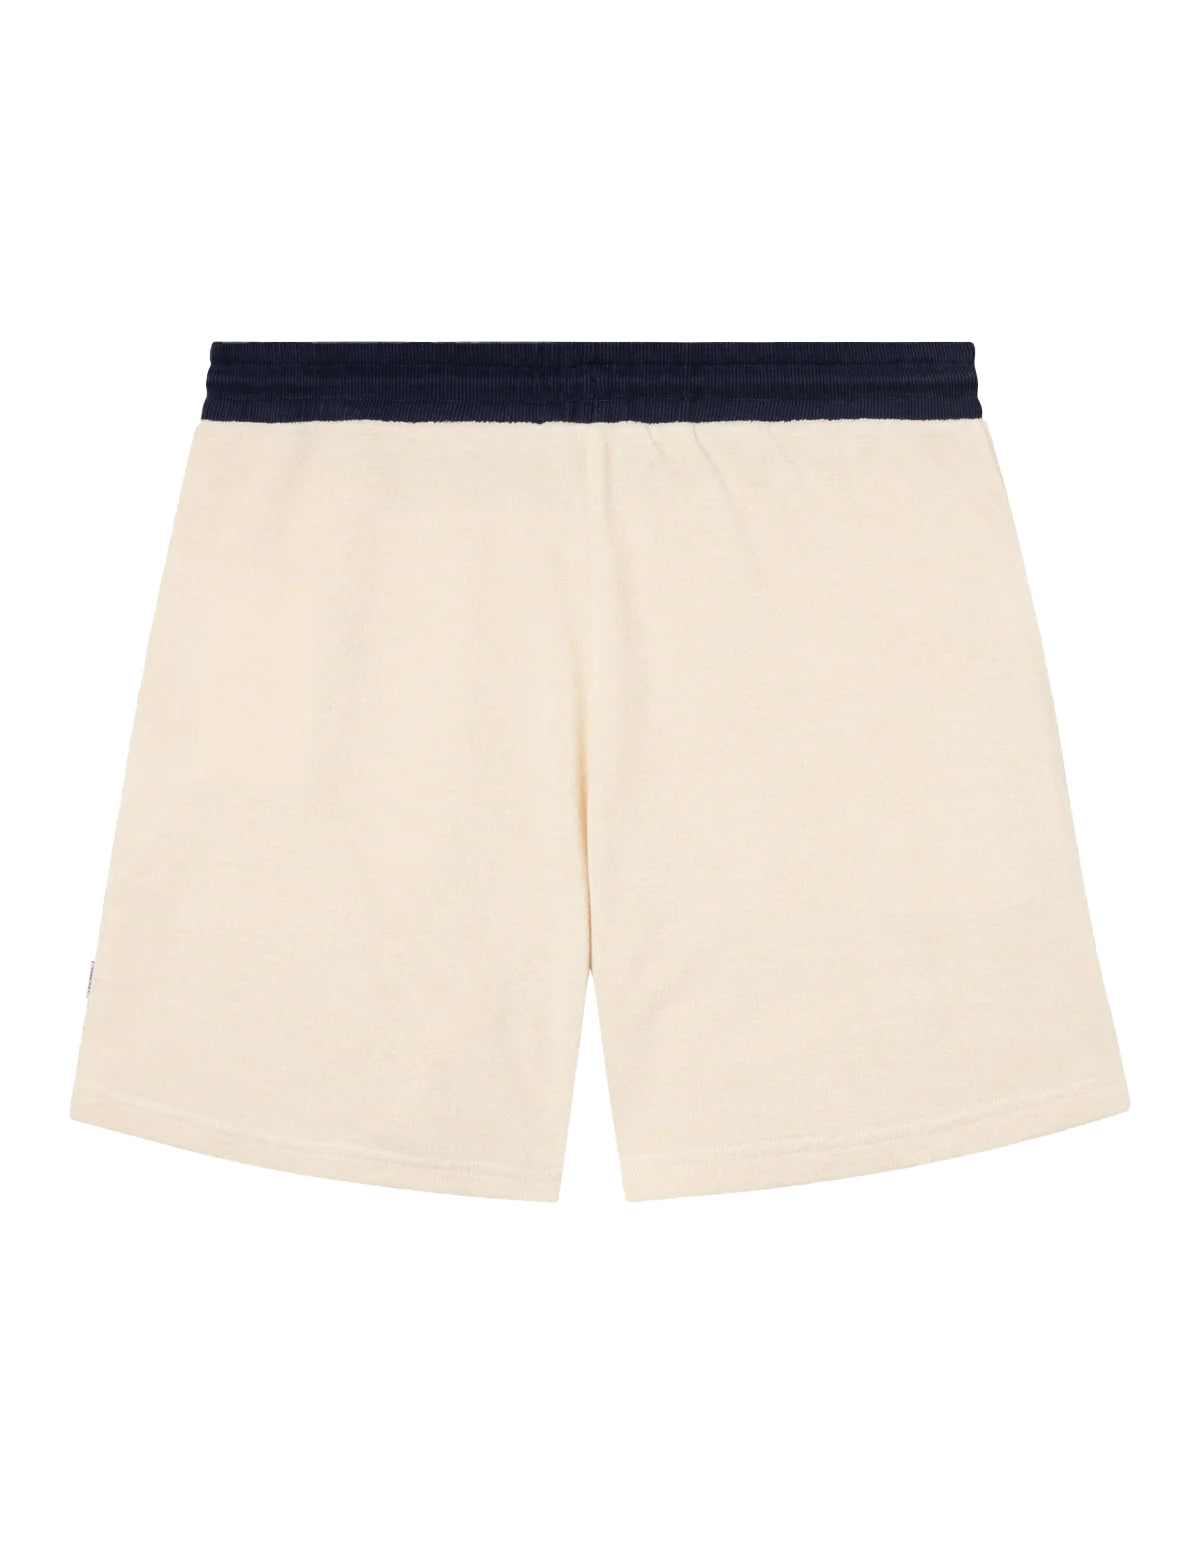 les deux_javier towel sports shorts_ivory dark navy_2_4